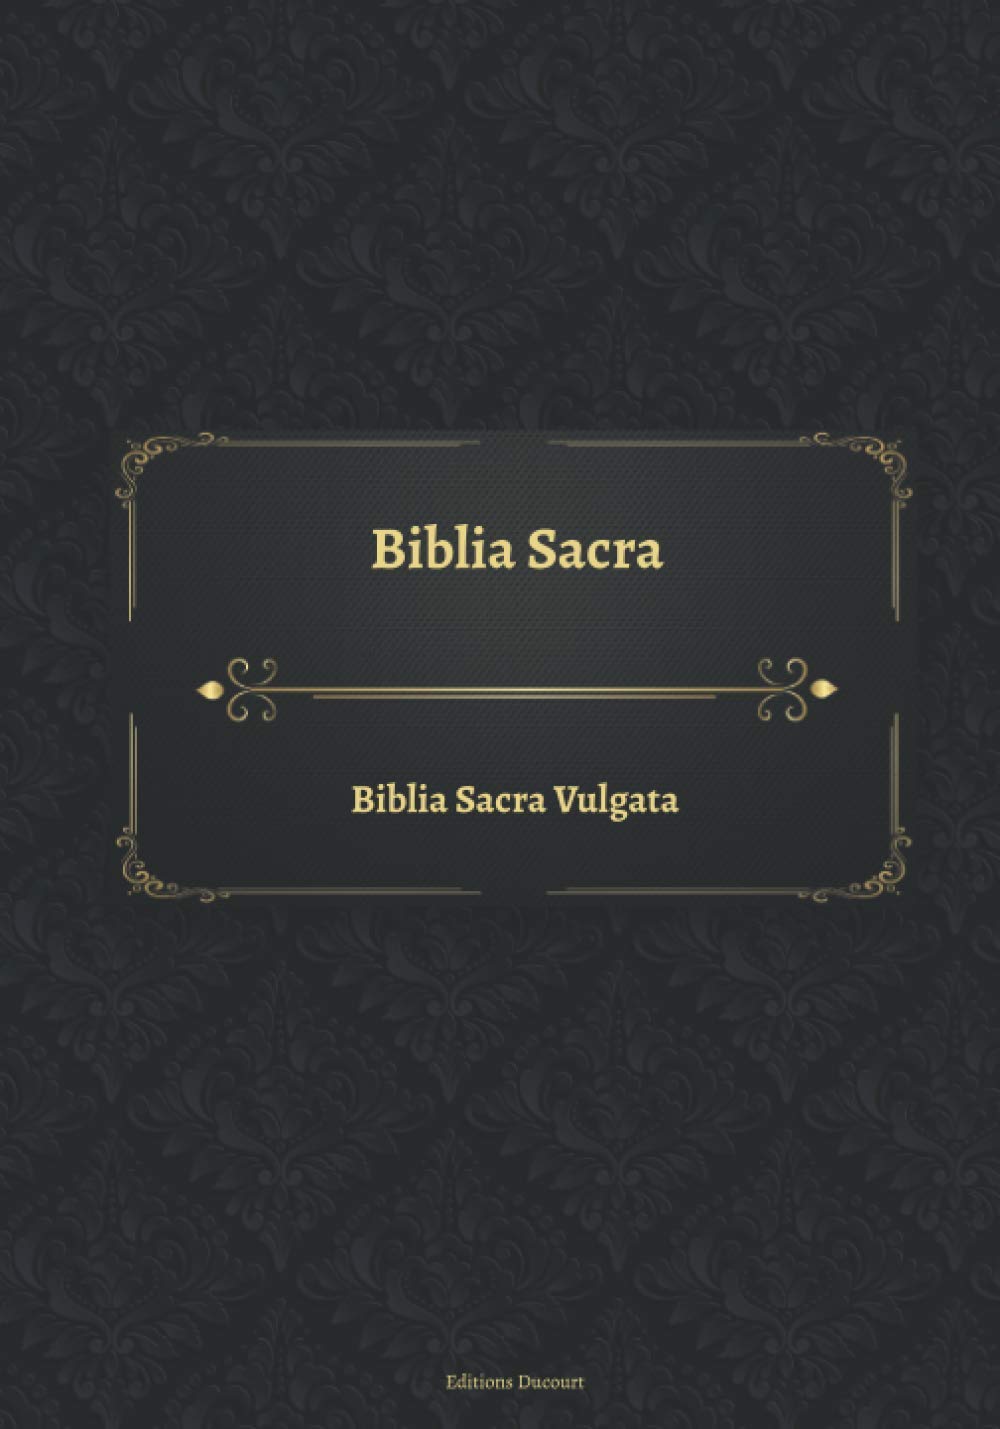 Biblia Sacra Vulgata (Latin Edition)